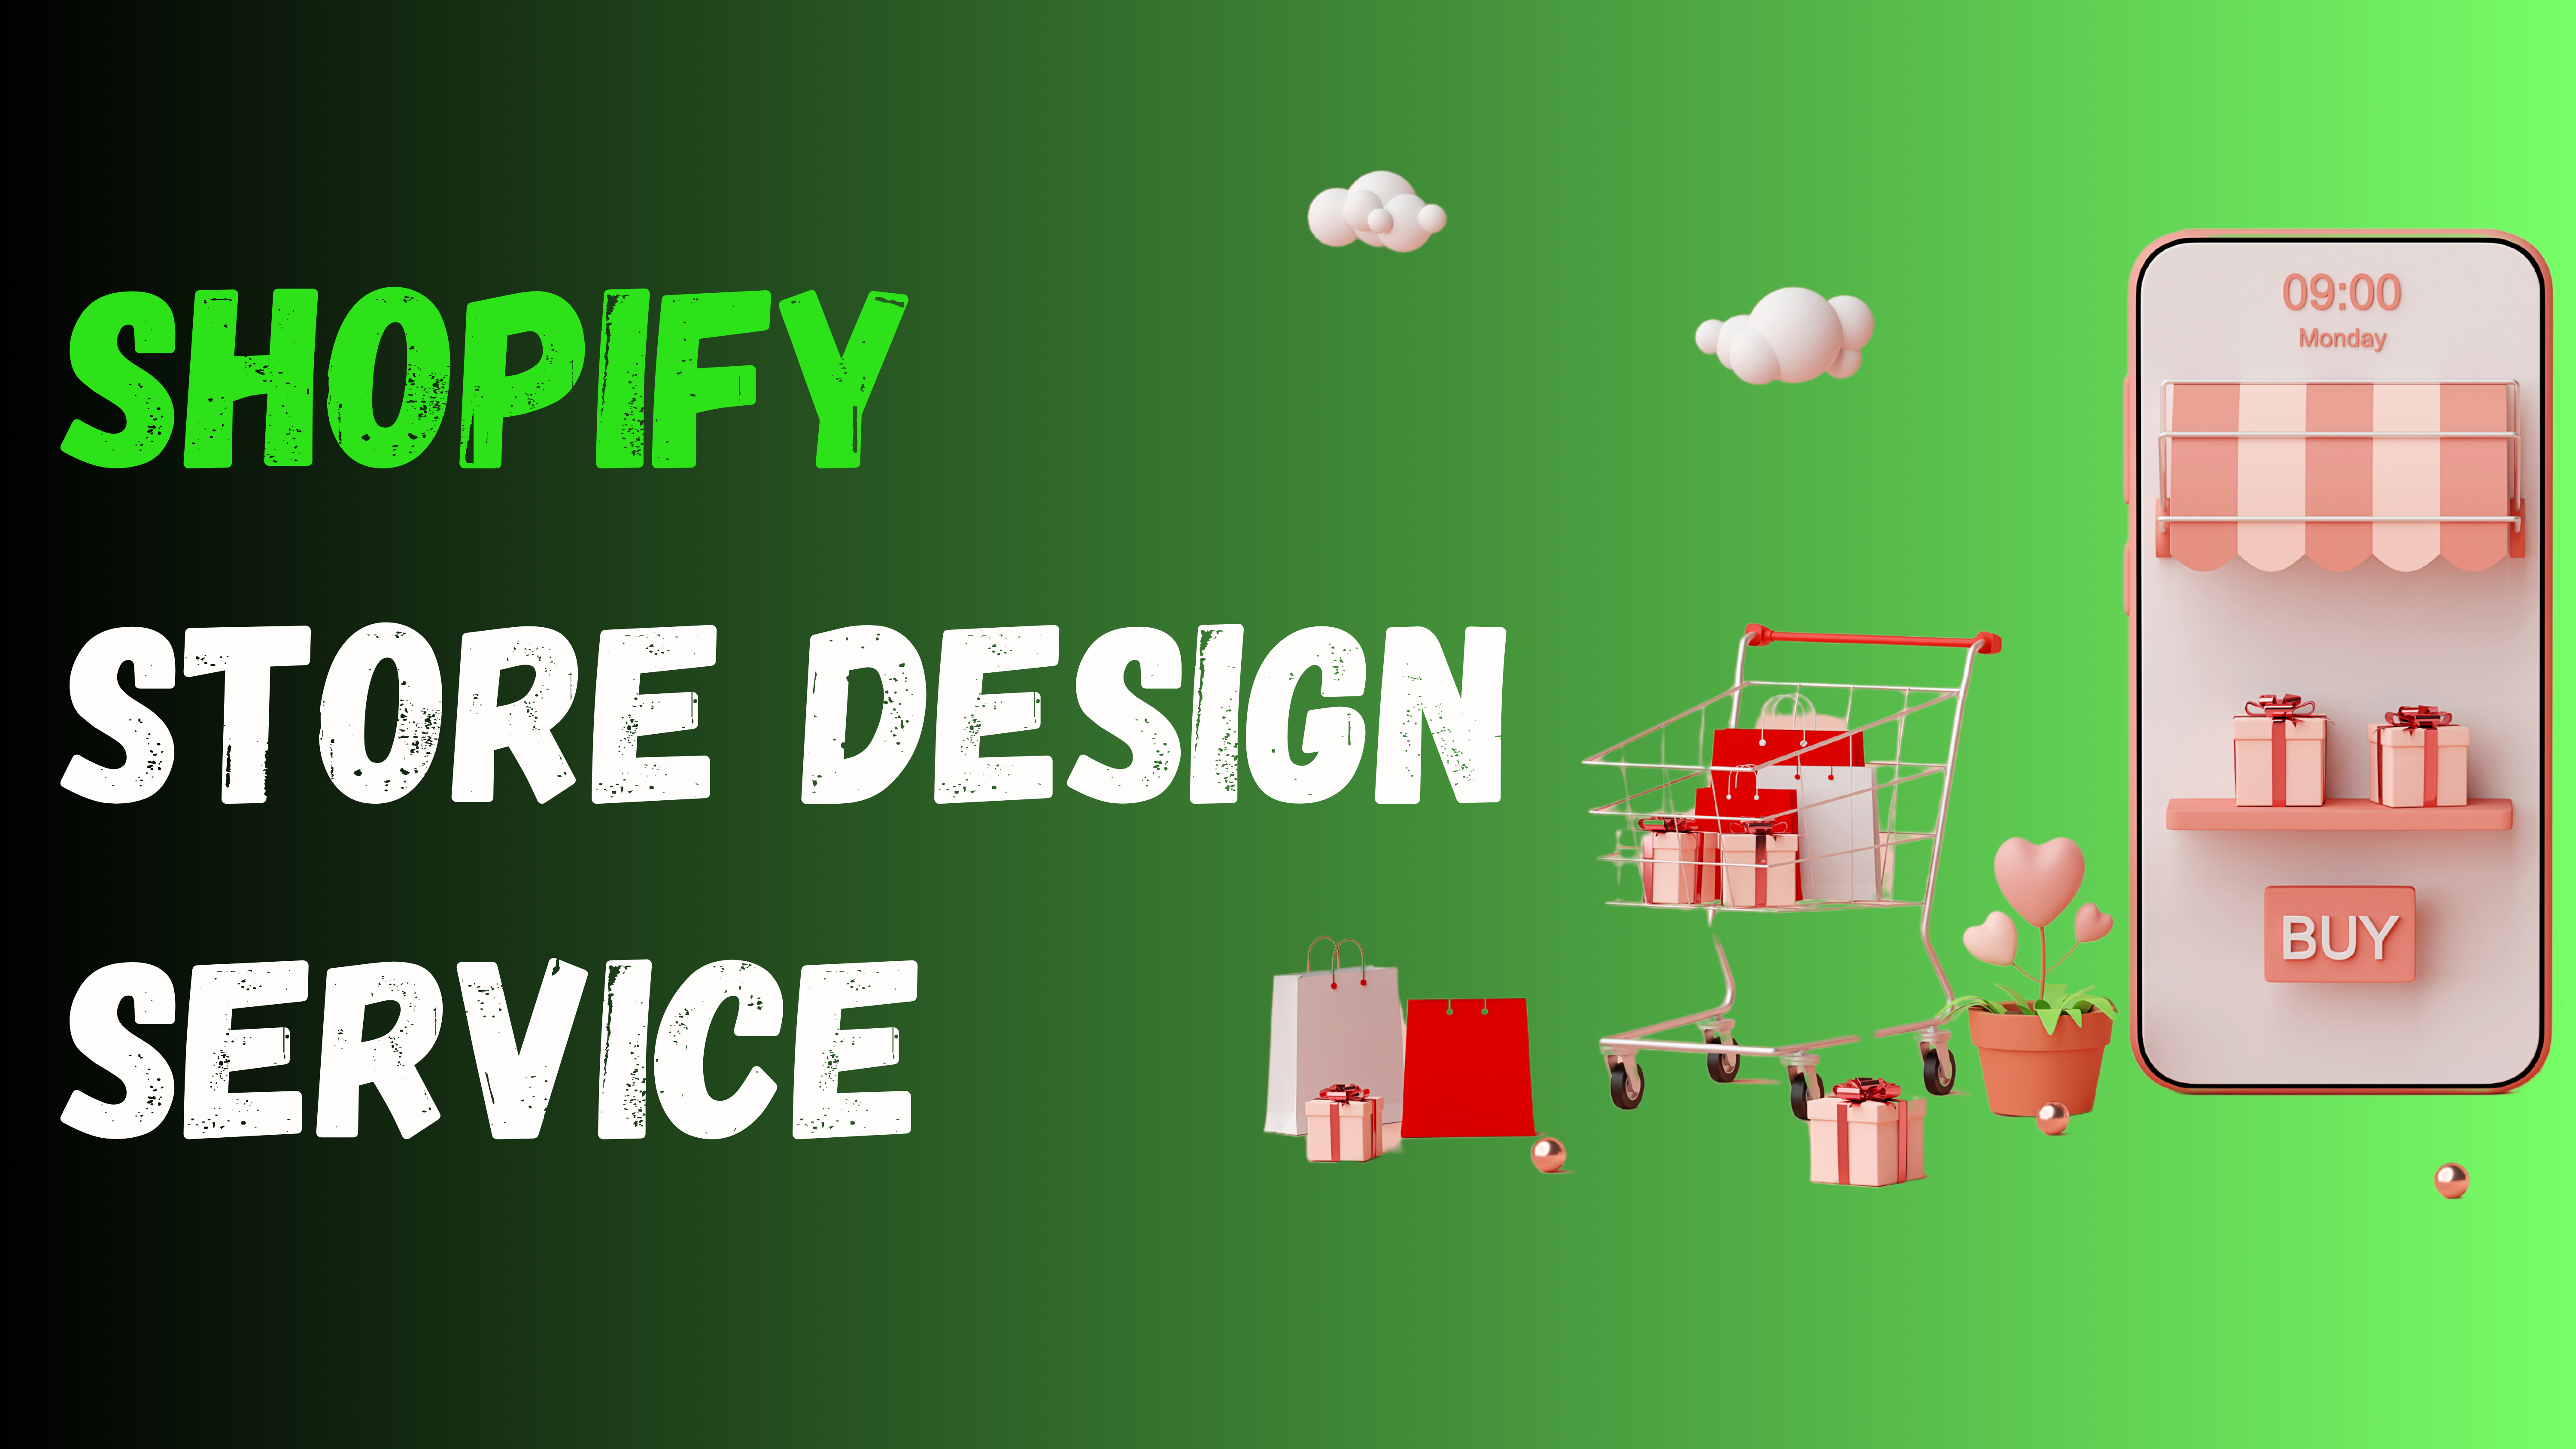 Shopify Store Design Service